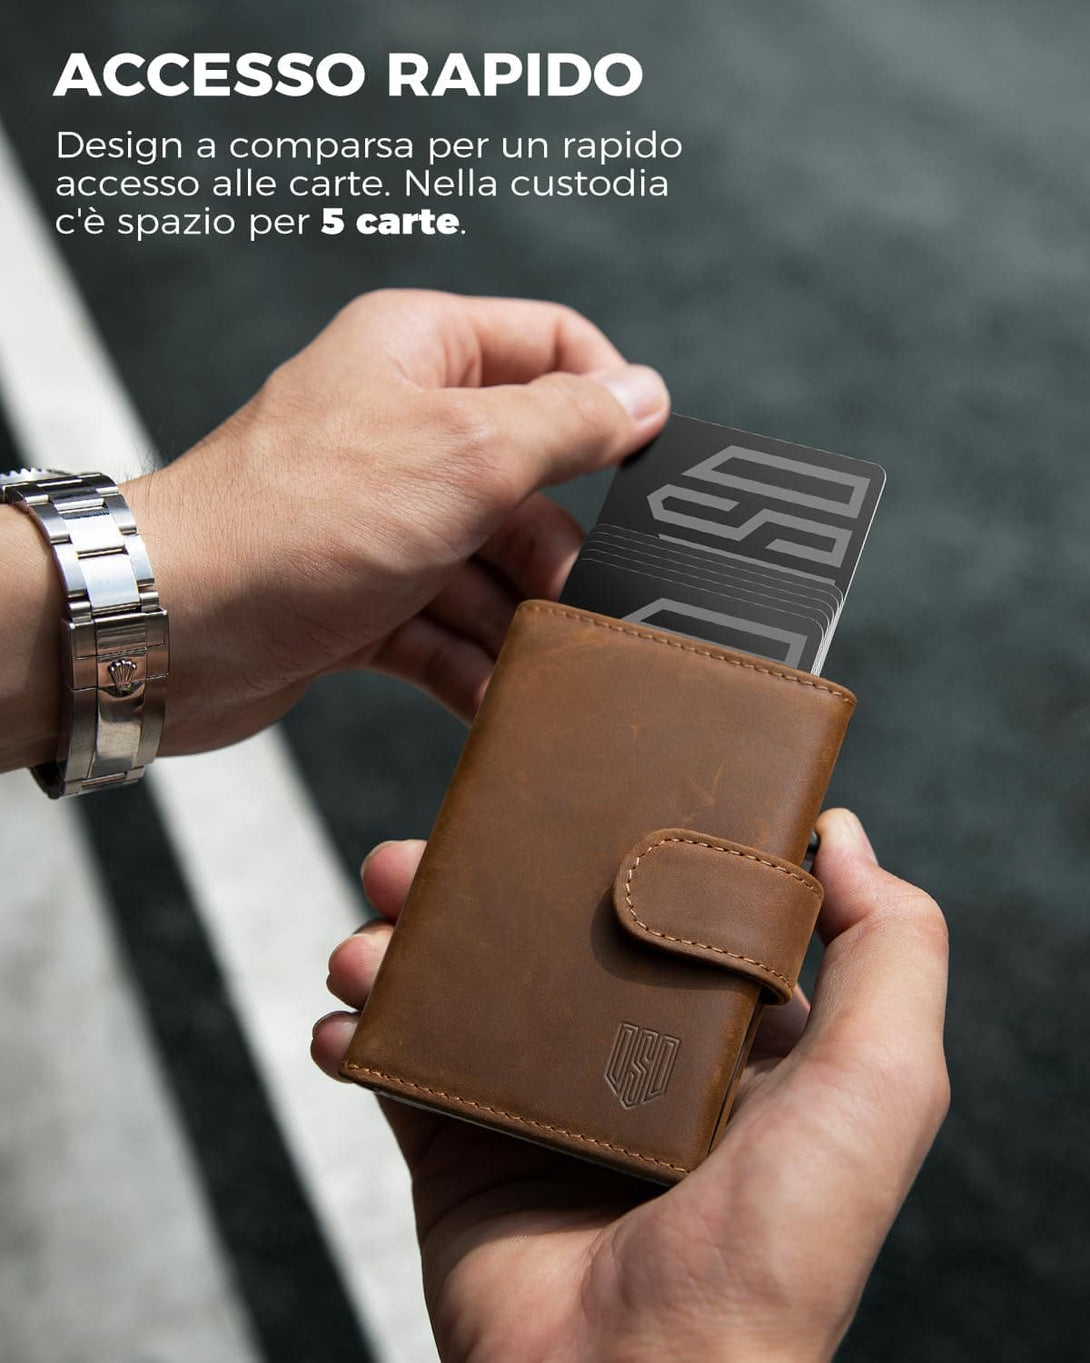 DODENSHA III AIR Wallet - Premium Leather - DODENSHA